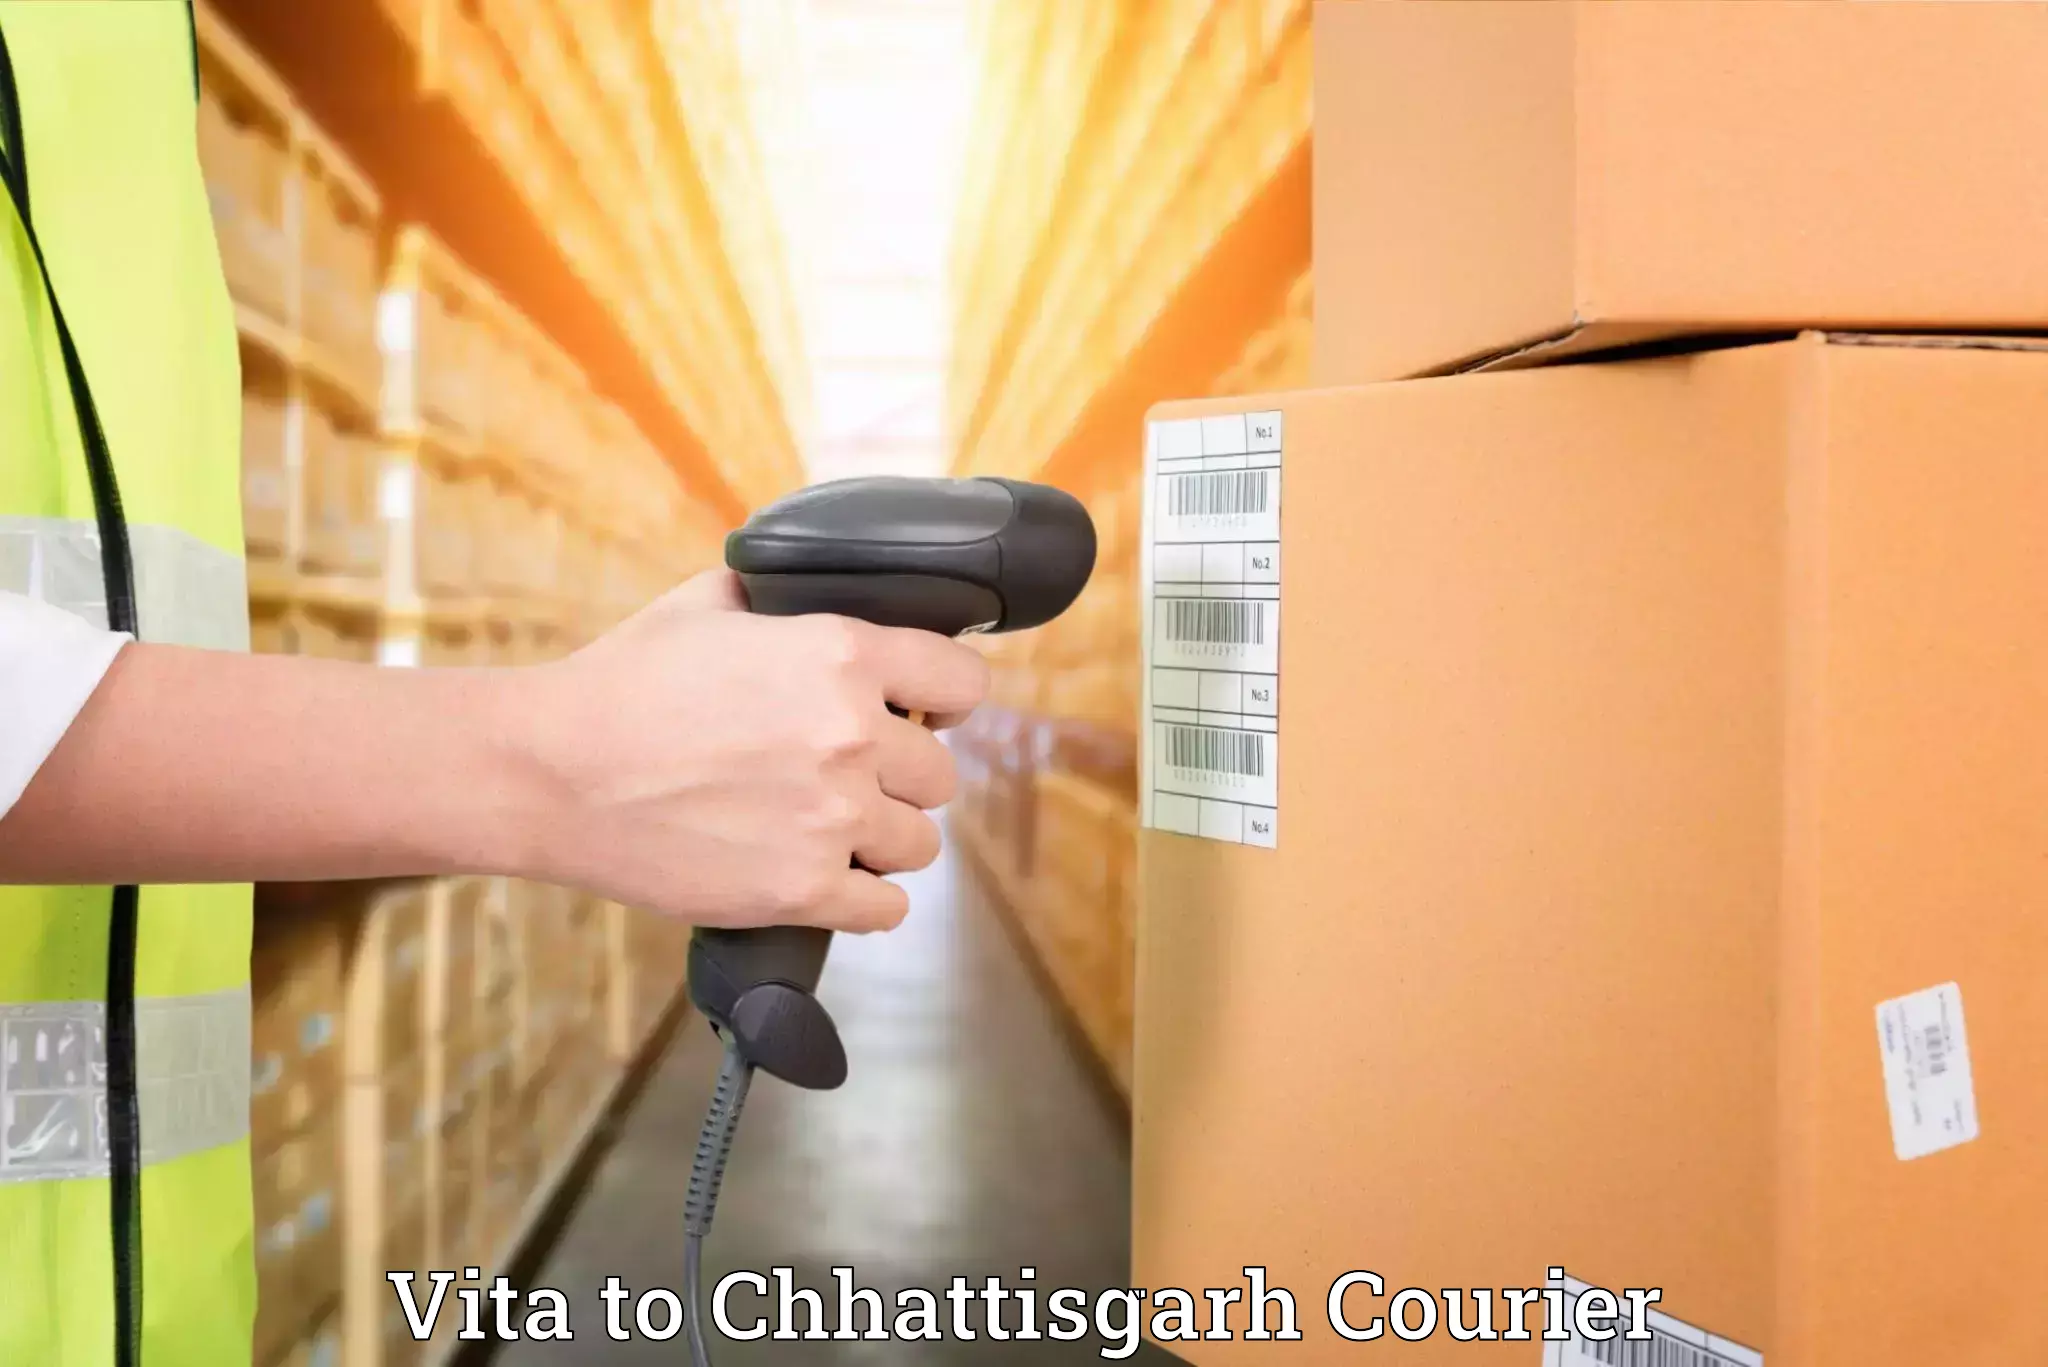 Furniture moving experts Vita to Chirimiri